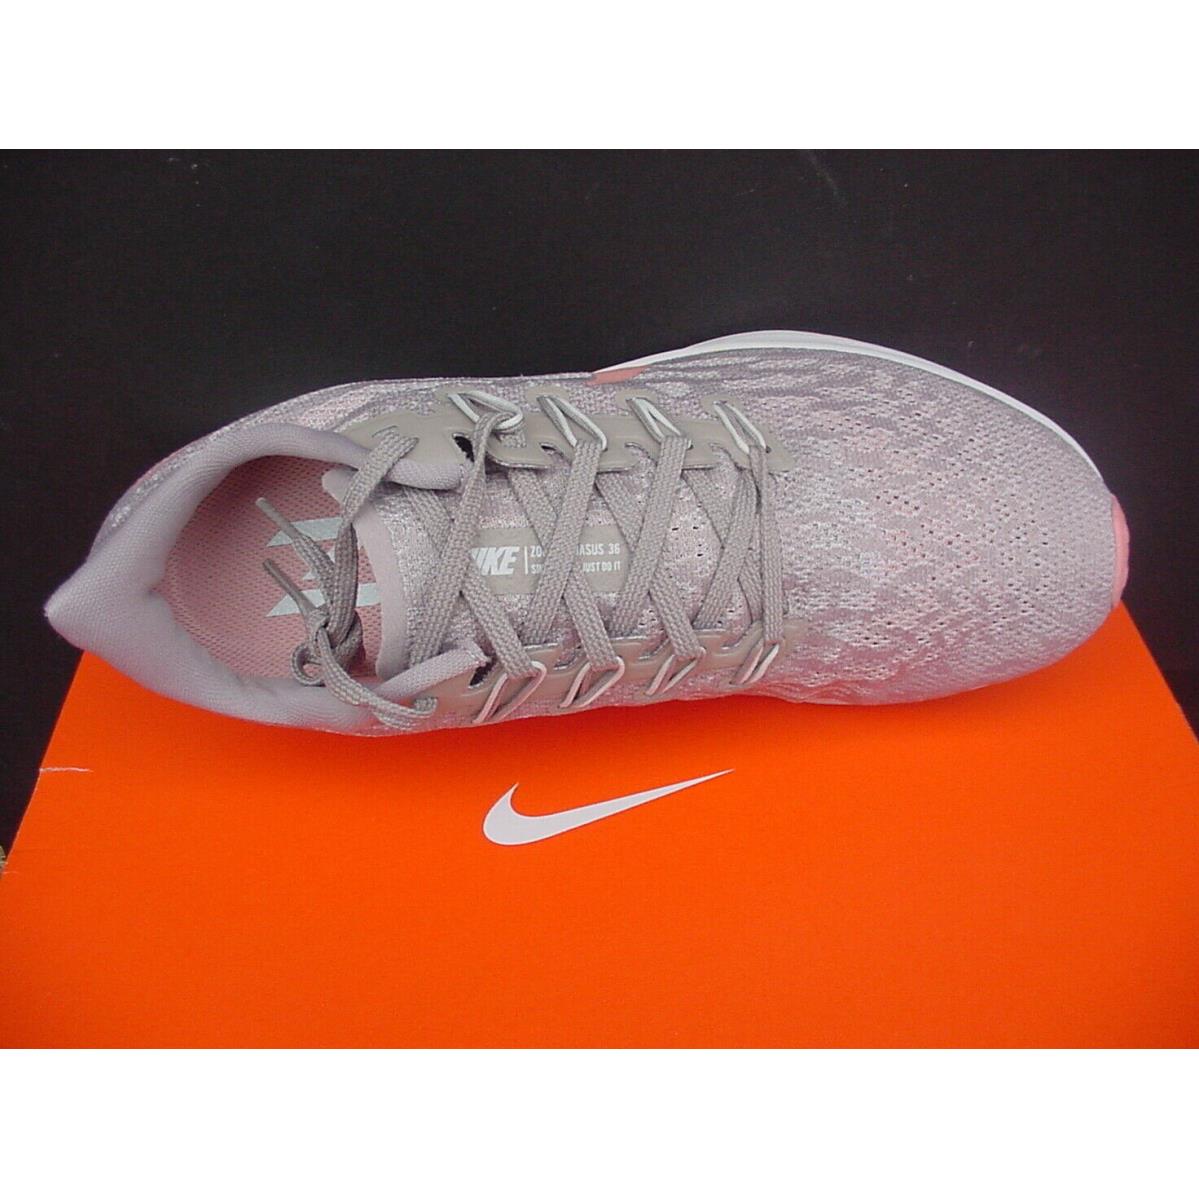 Nike shoes Air Zoom Pegasus - Pumice - Pink Quartz - Vast Gray - Taupe Tan Peach 1